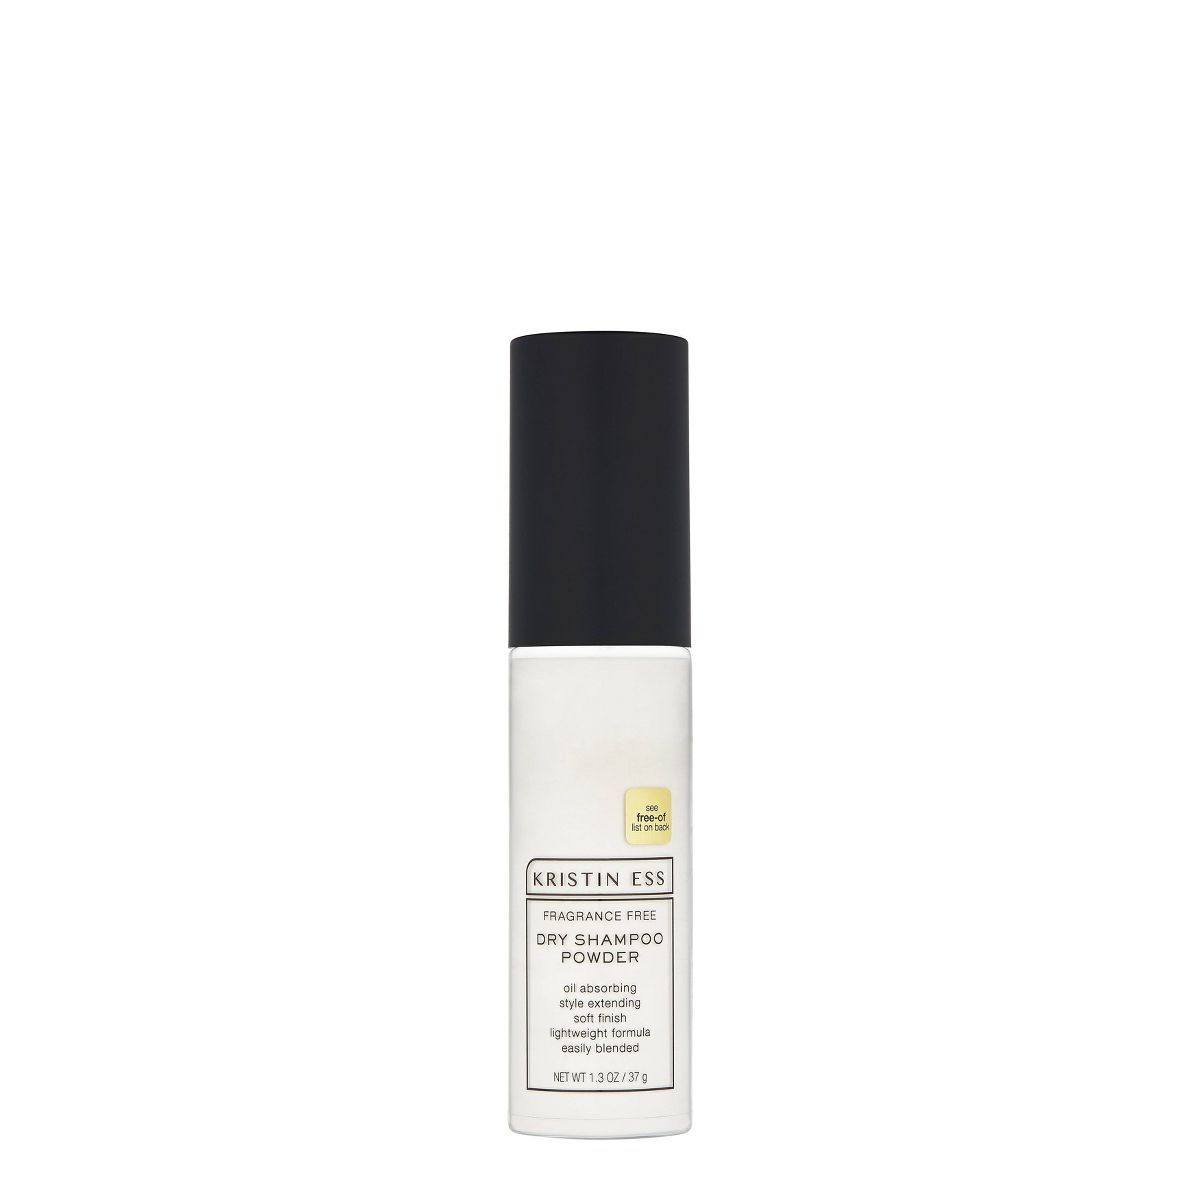 Kristin Ess Fragrance Free Dry Shampoo Powder Spray for Oily Hair - Absorbs Oil, Hair Style Exten... | Target